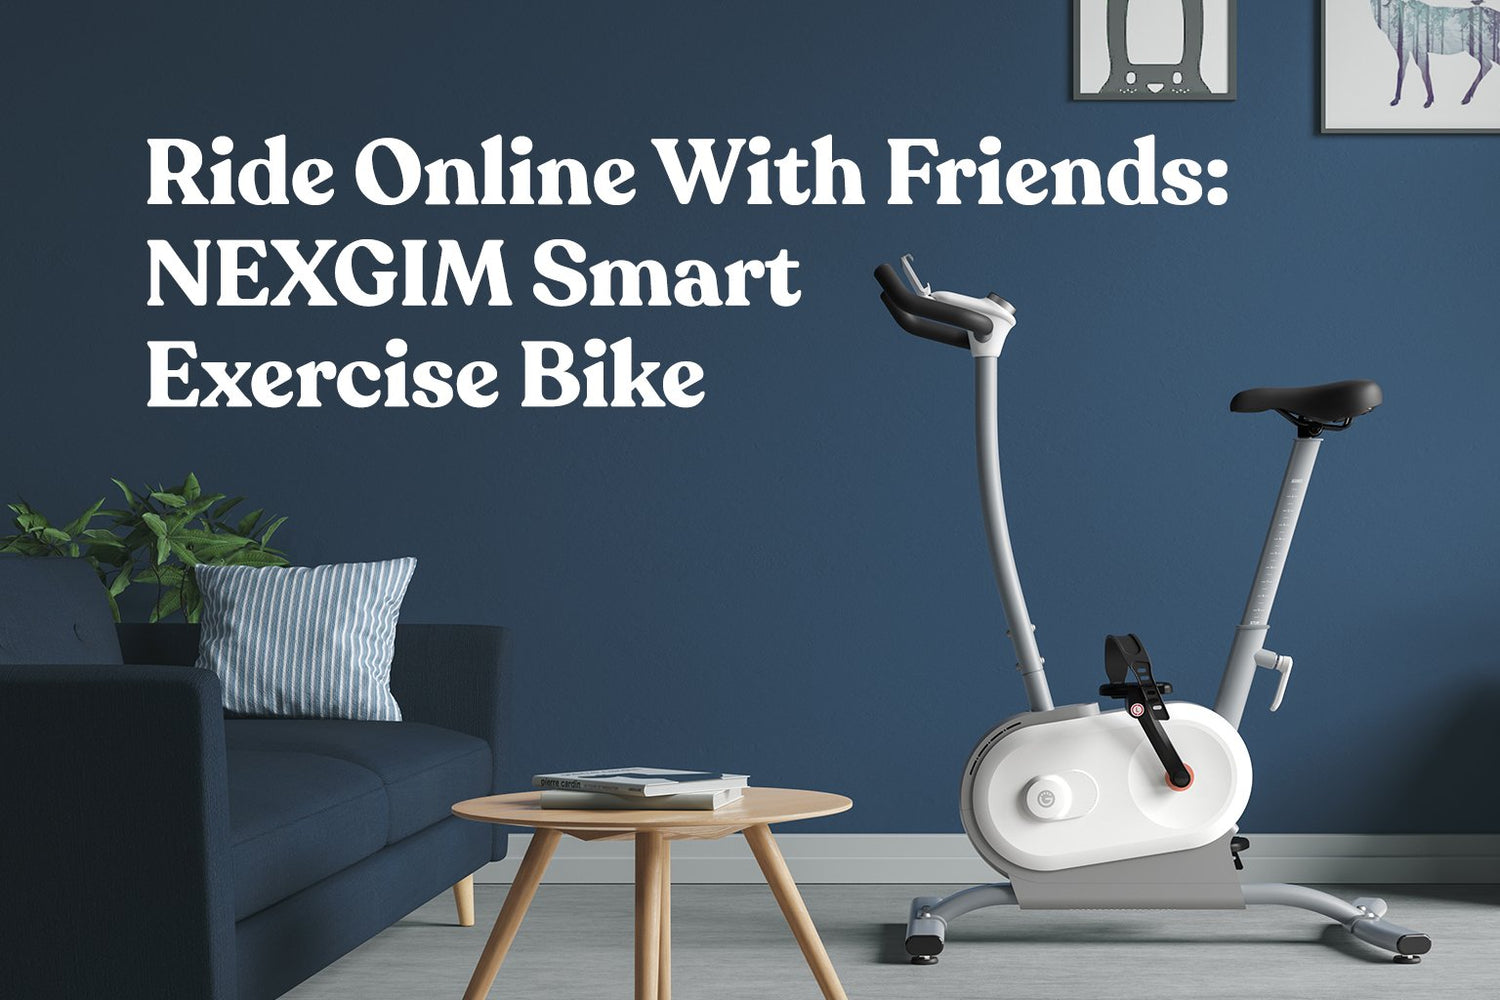 Ride Online With Friends: NEXGIM Smart Exercise Bike